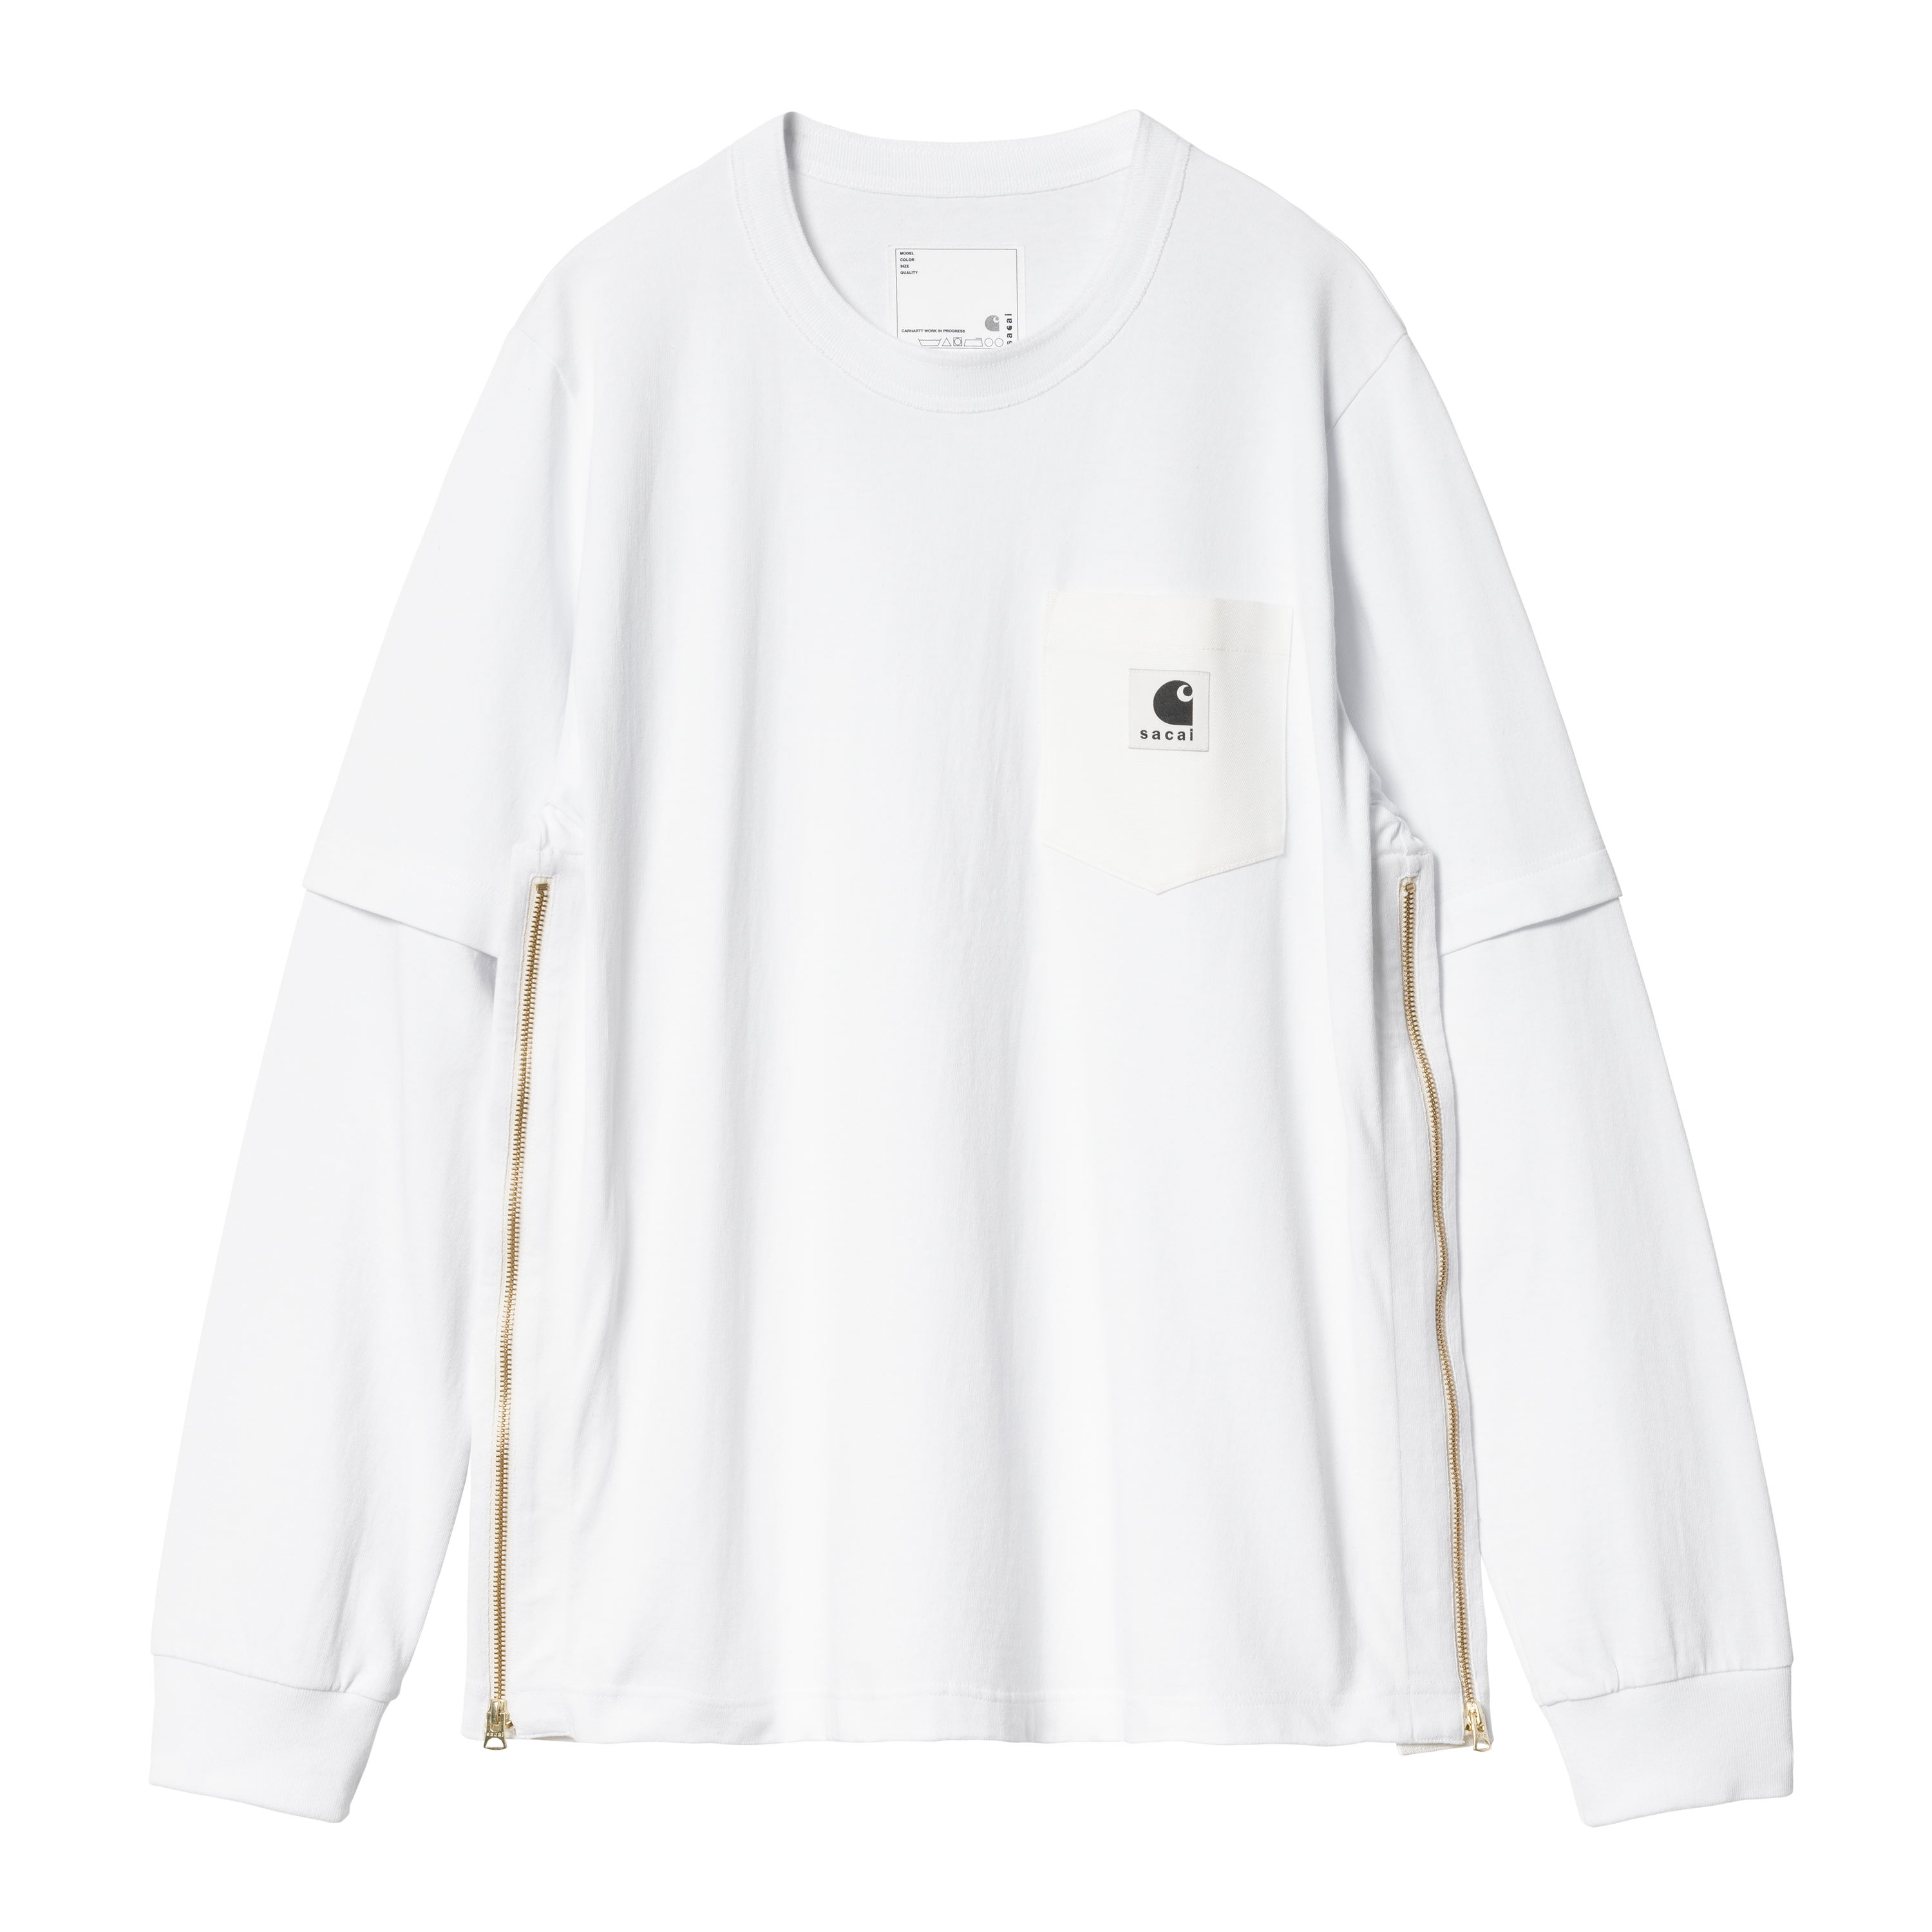 Carhartt WIP sacai x Carhartt WIP Long Sleeve T-Shirt Blanc